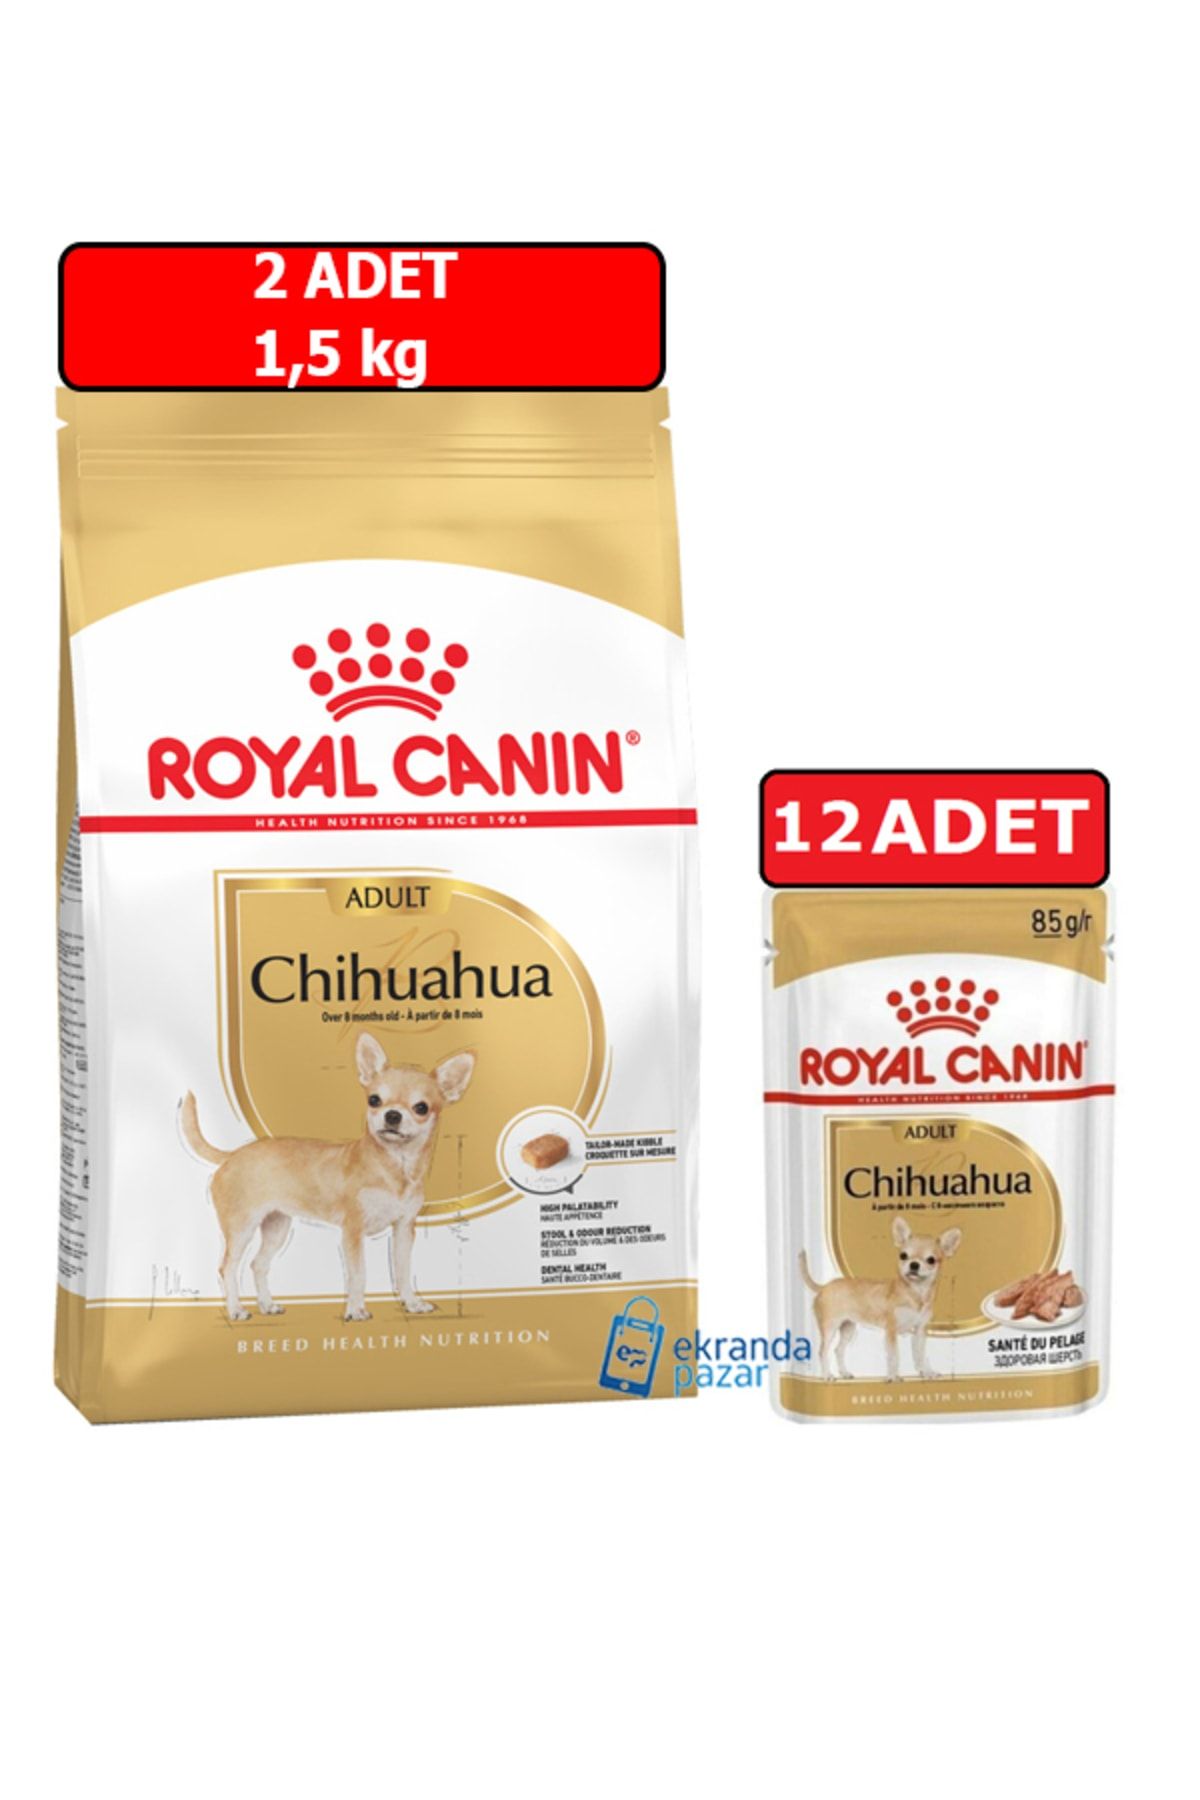 Royal Canin Chihuahua Üçlü Paket 2 Adet 1,5kg Kuru Mama-12 Adet 85gr Chihuahua Yaş Mama